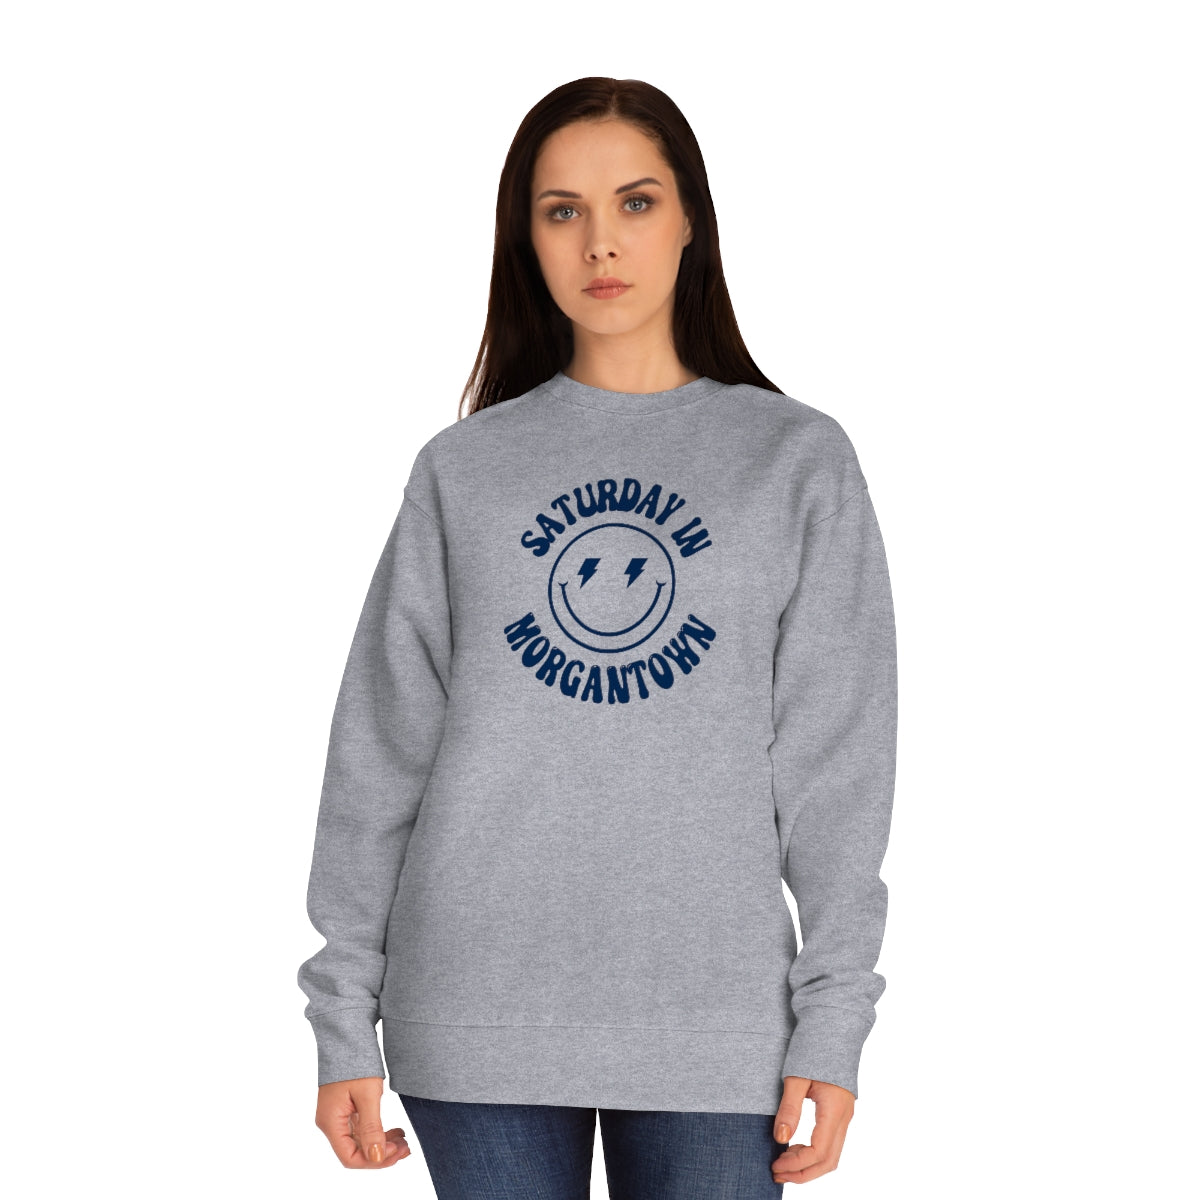 Smiley Morgantown Crew Sweatshirt - GG - CH